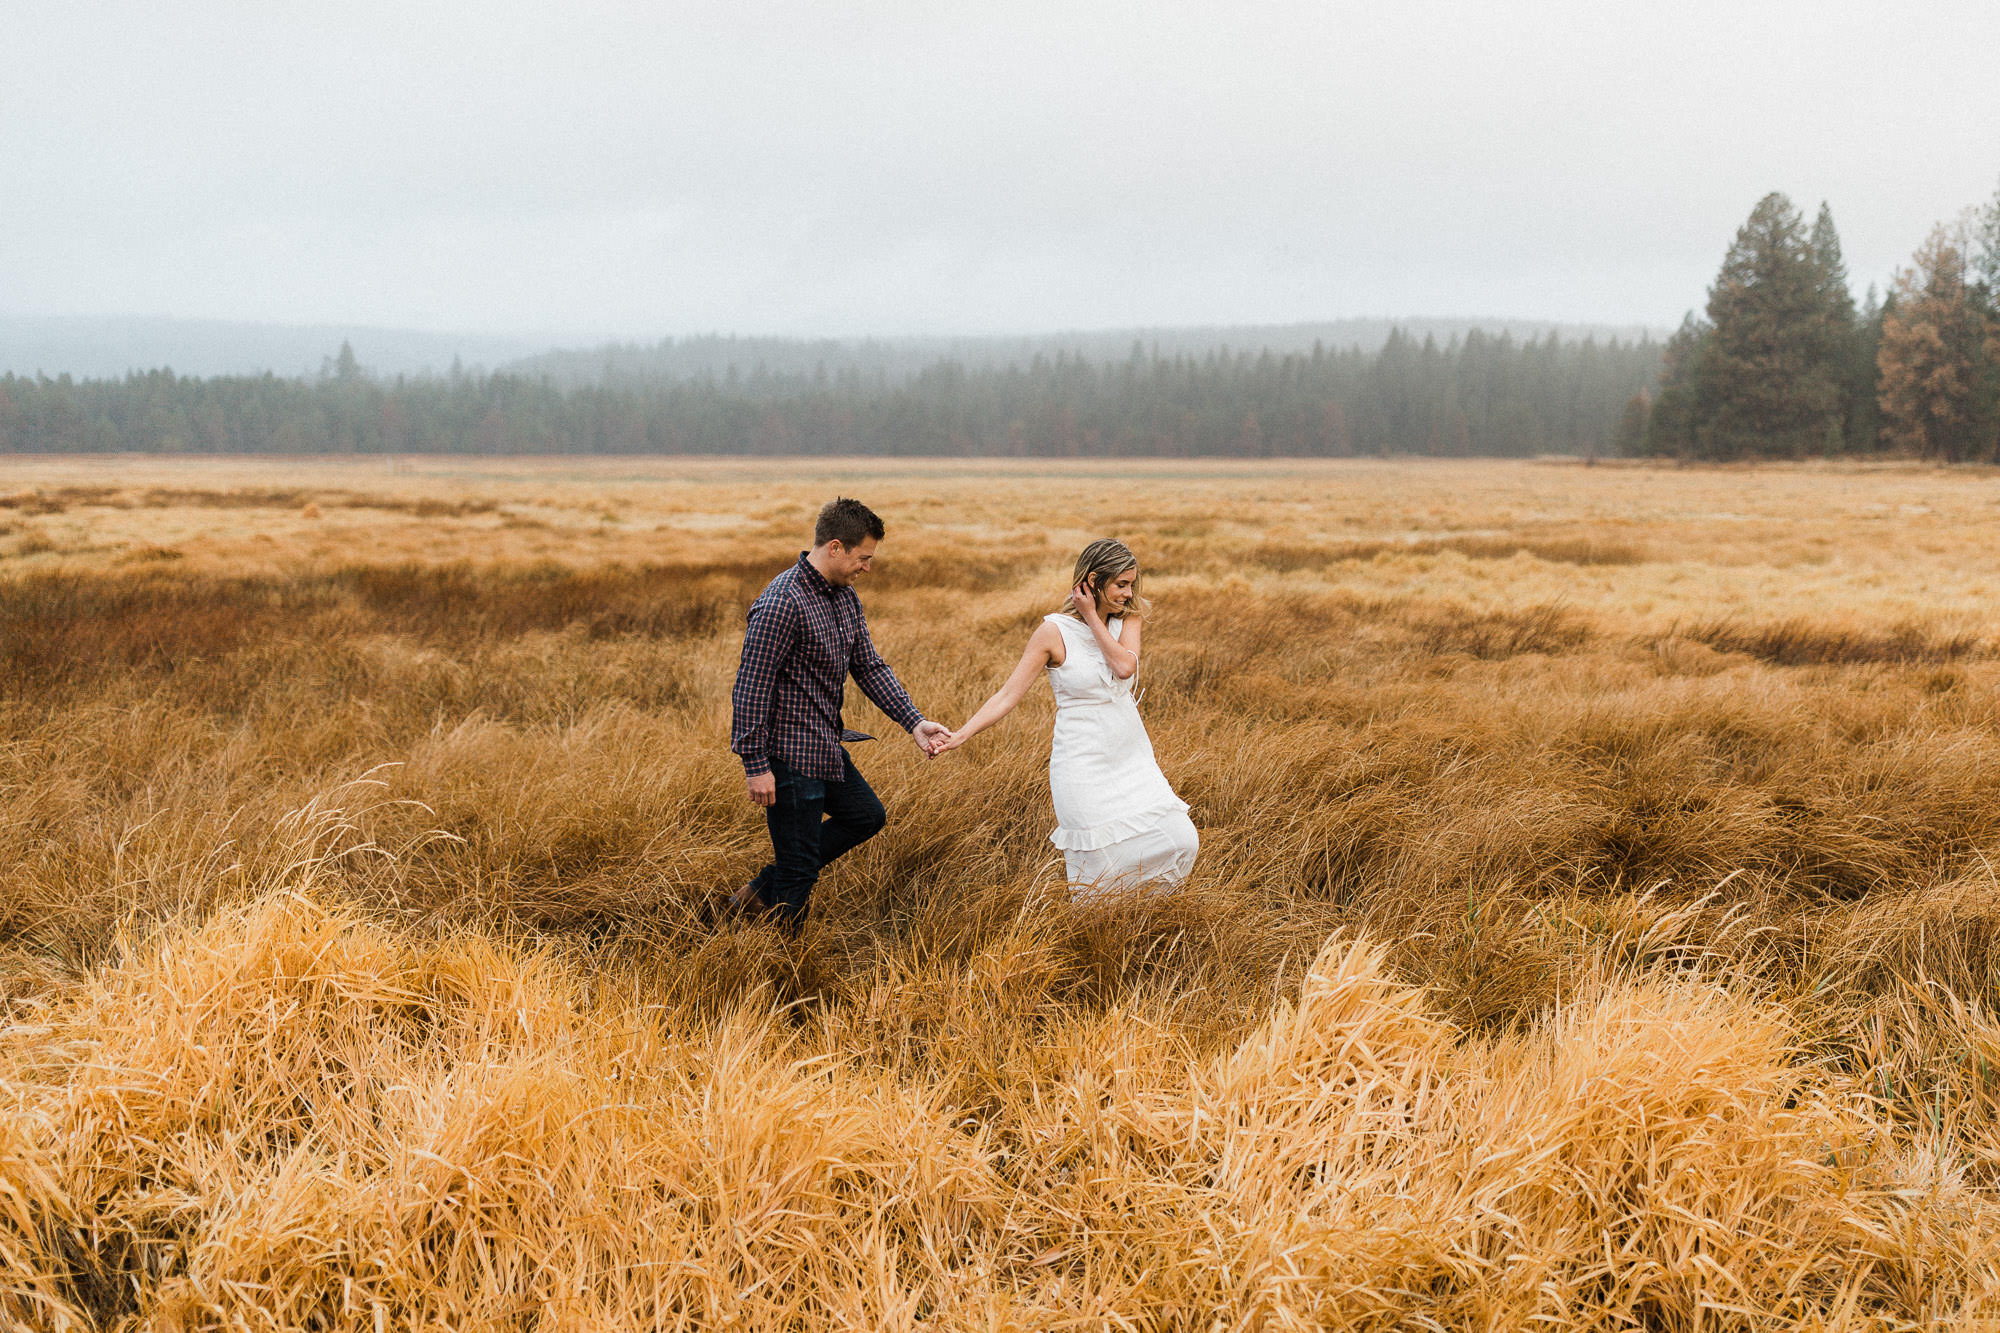 A couple walks through a field of dry grass along the Deschutes River in Bend, Oregon